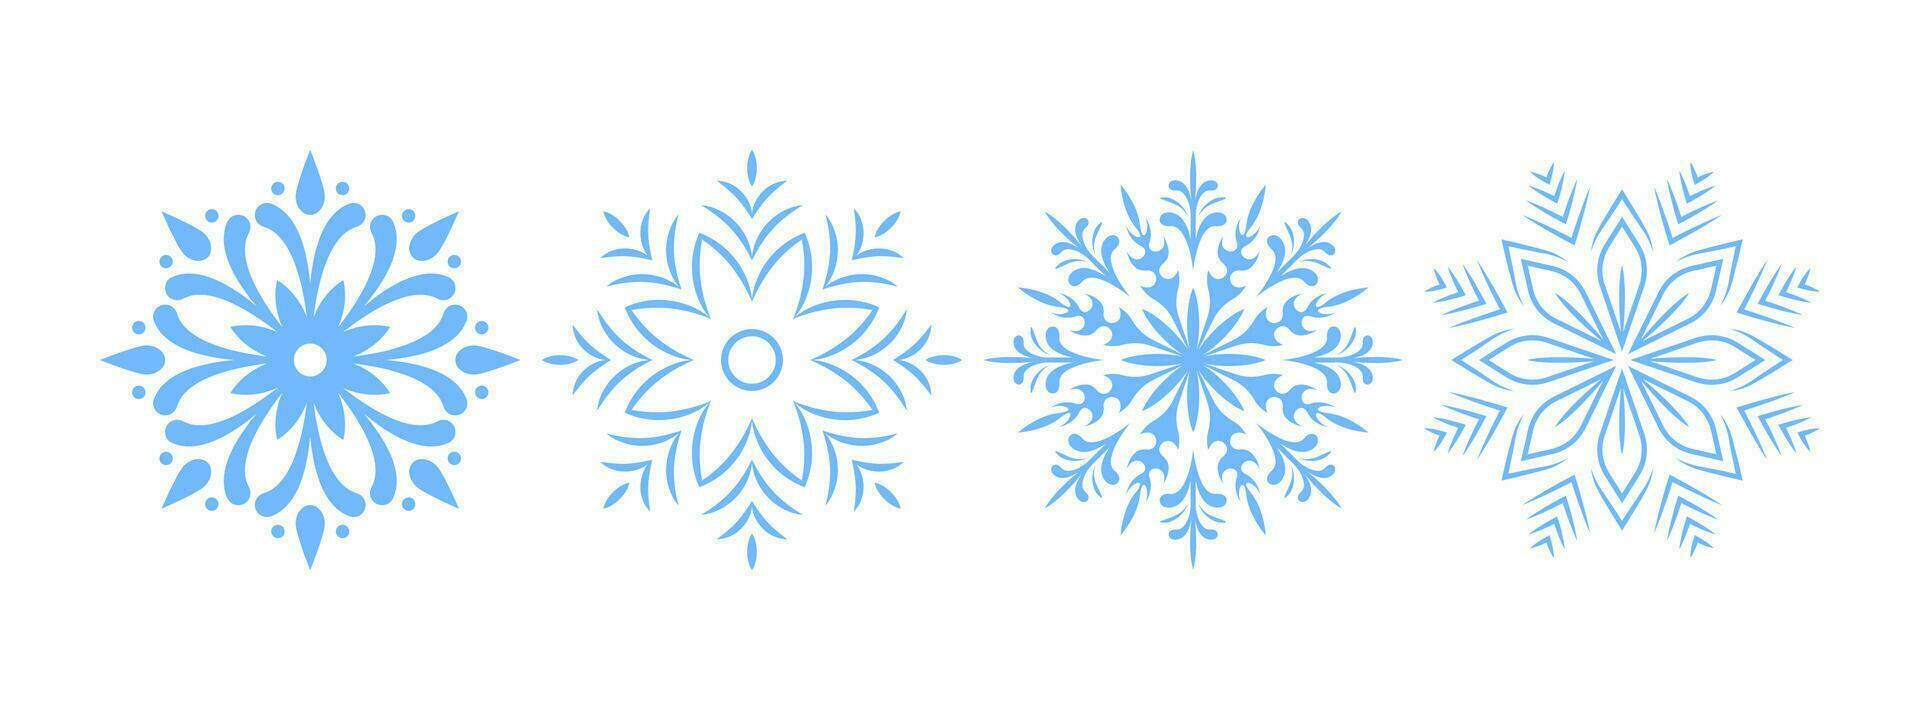 snöflingor. ljus blå snöflingor uppsättning. snöflinga annorlunda ikoner. vektor skalbar grafik